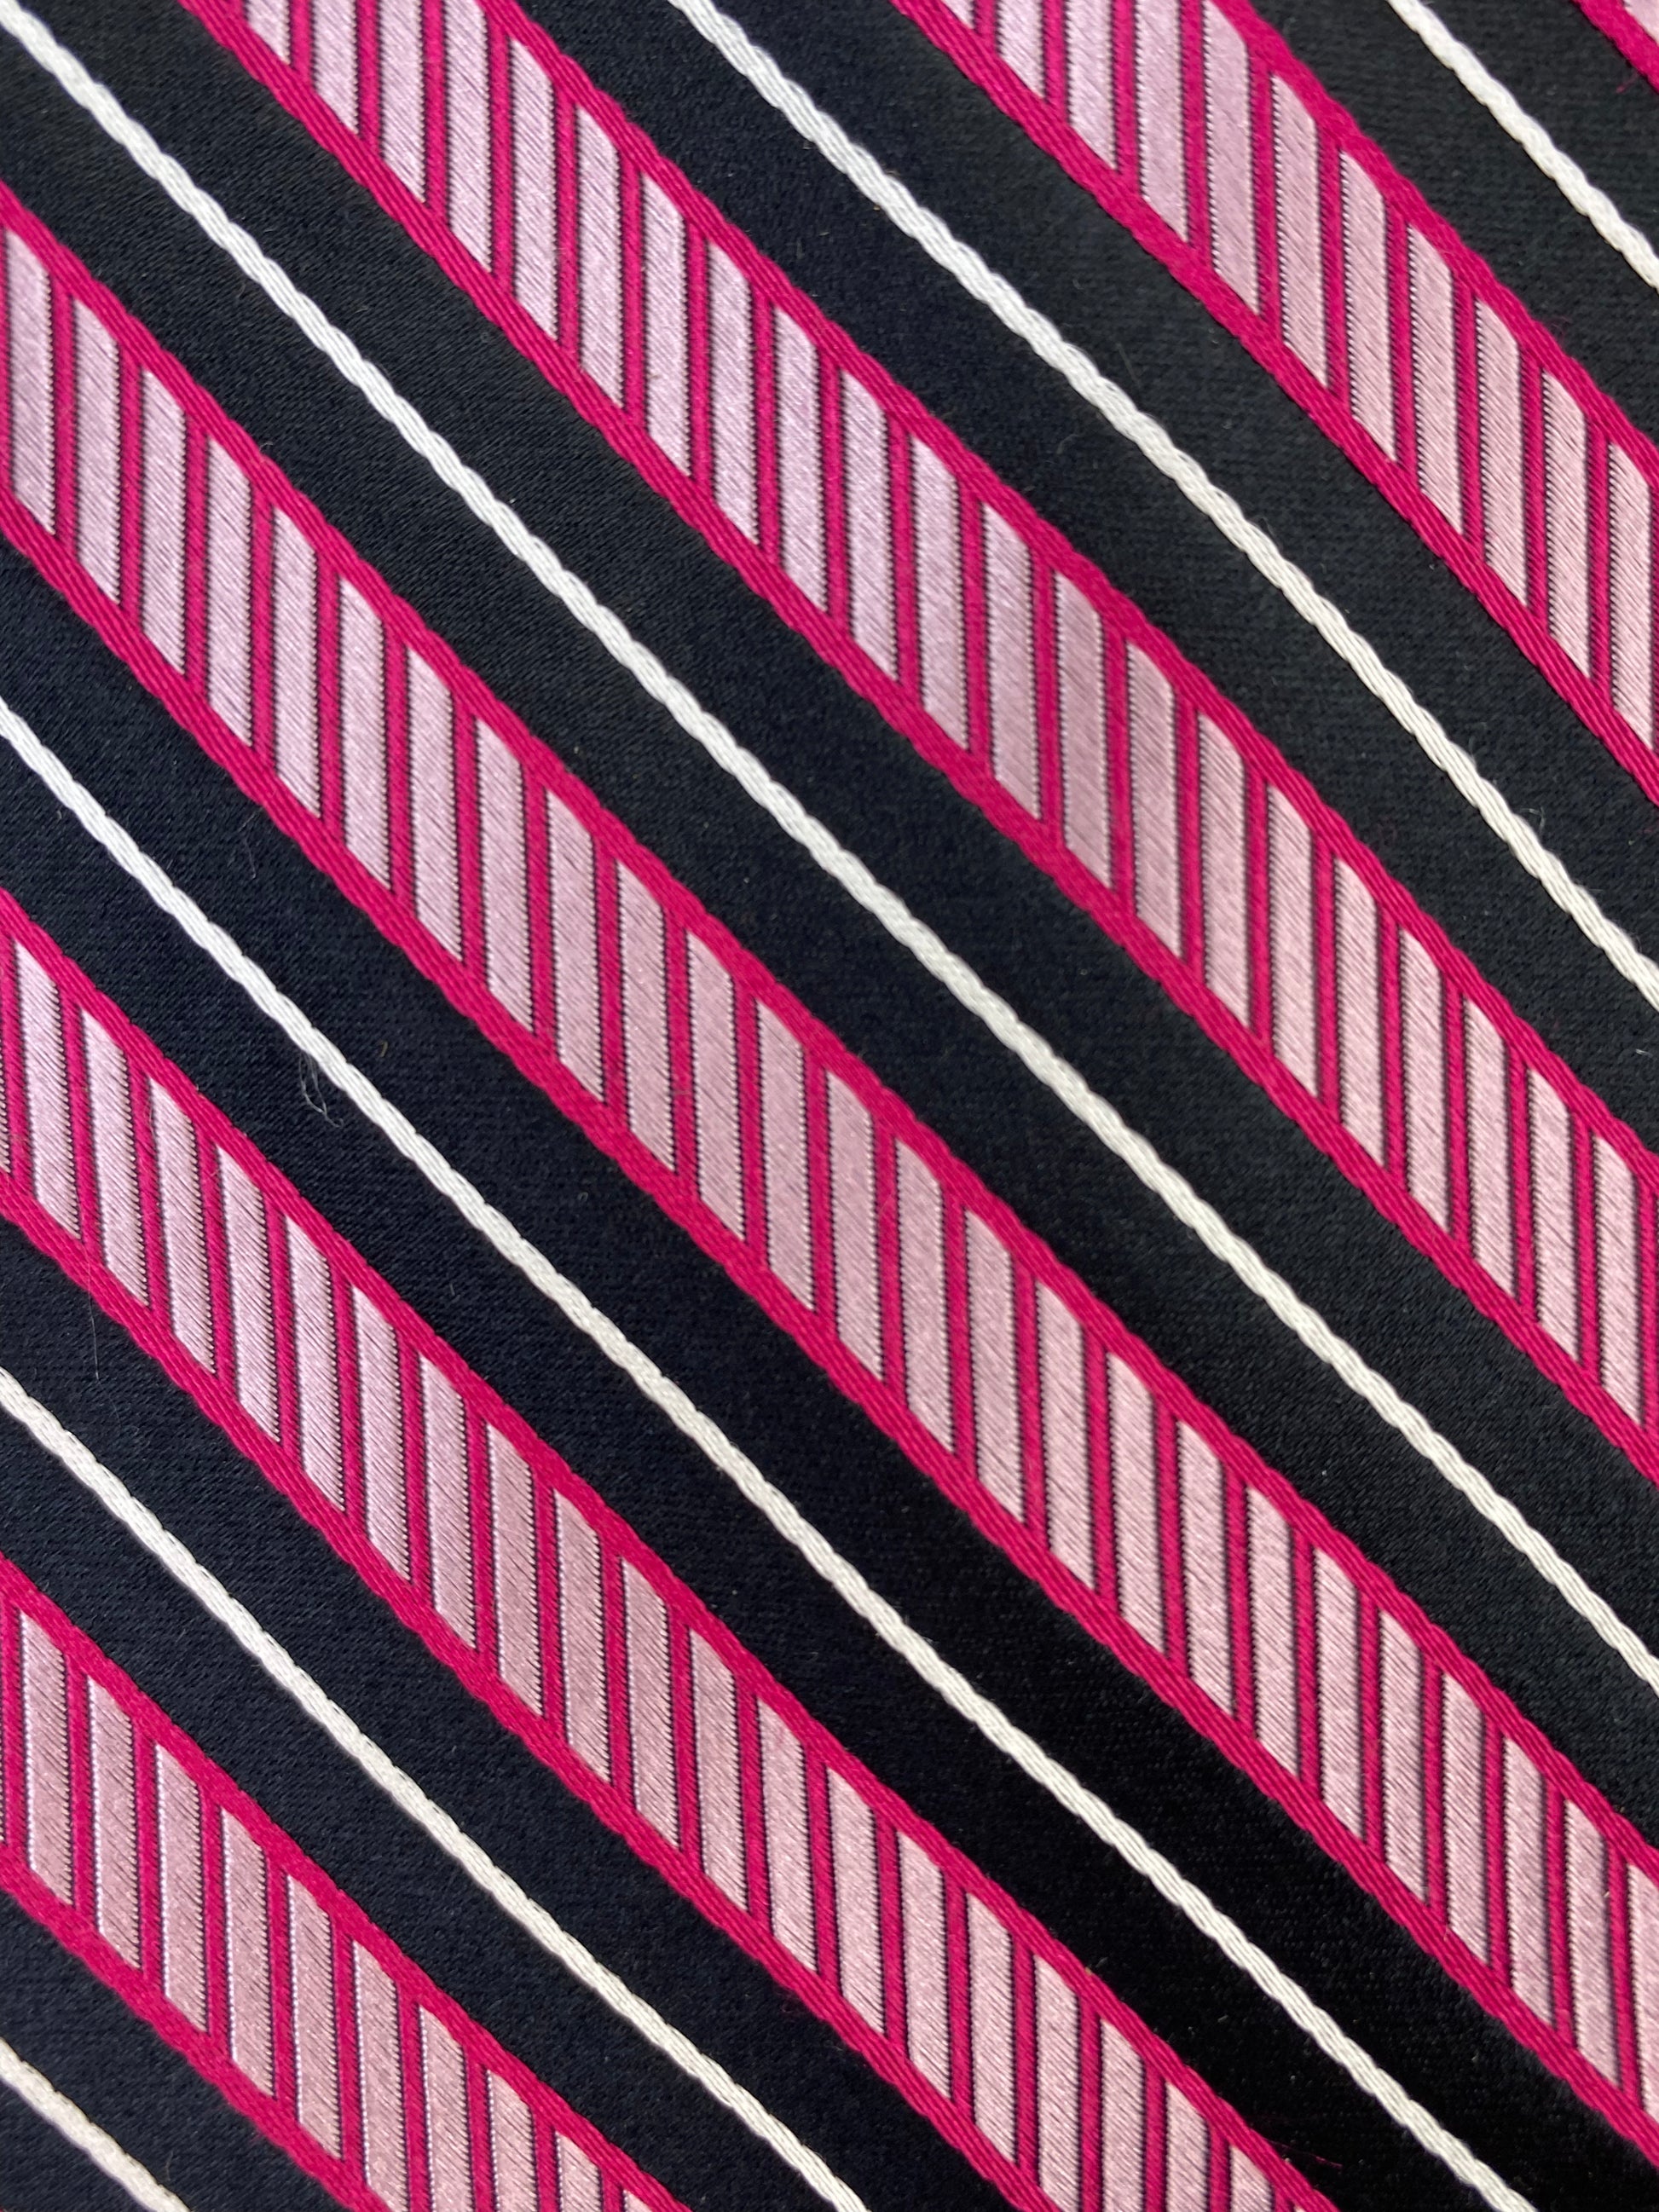 90s Deadstock Silk Necktie, Men's Vintage Pink/ Black Diagonal Stripe Pattern Tie, NOS